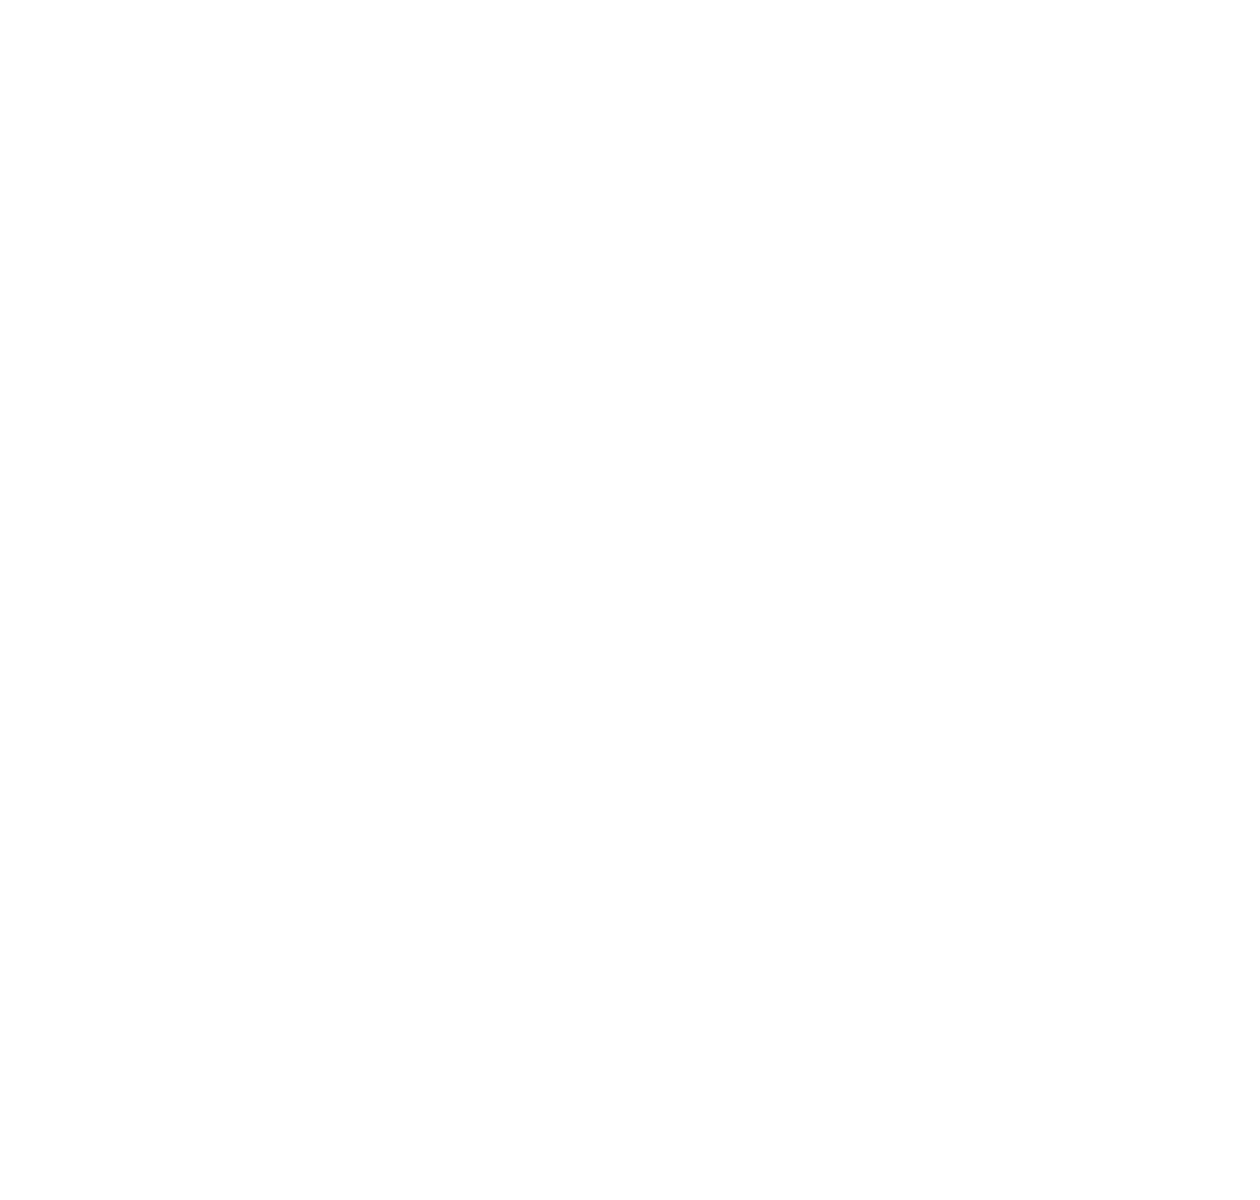 Abortion FAQ